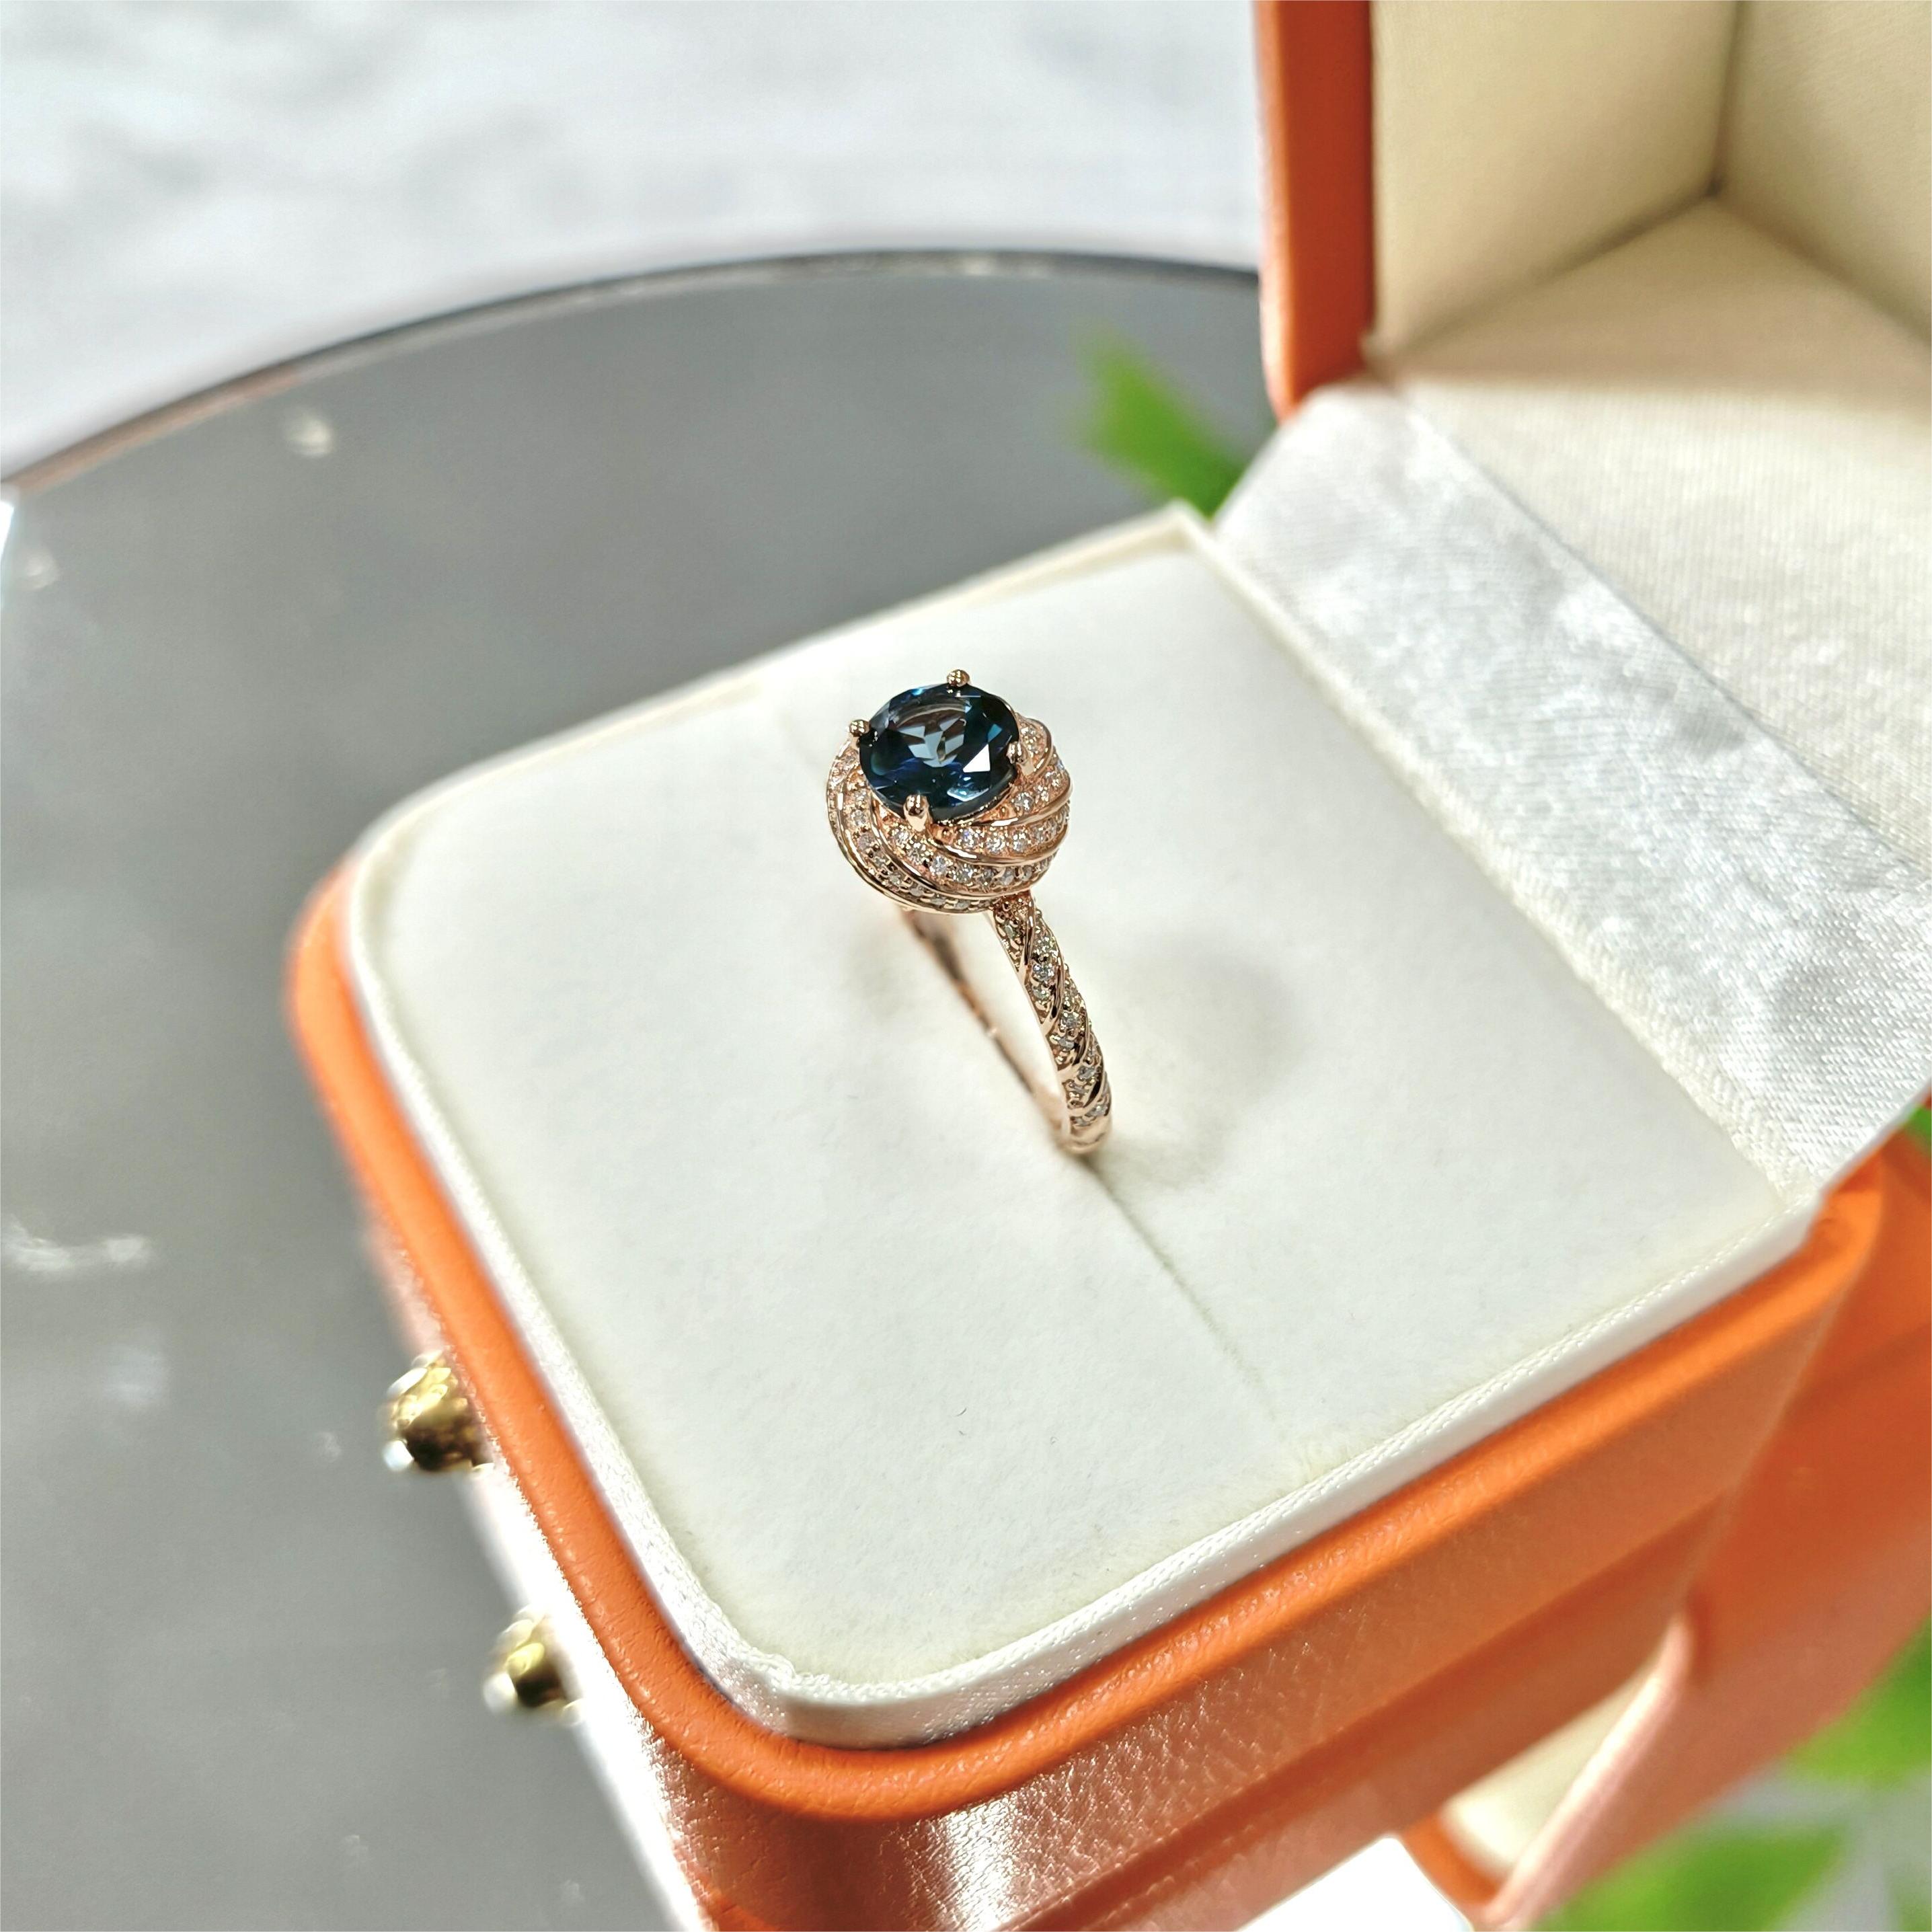 Topaz Moissanite Luxury Round Cut 14k Real Gold Gemstone Ring London Blue Topaz Ring